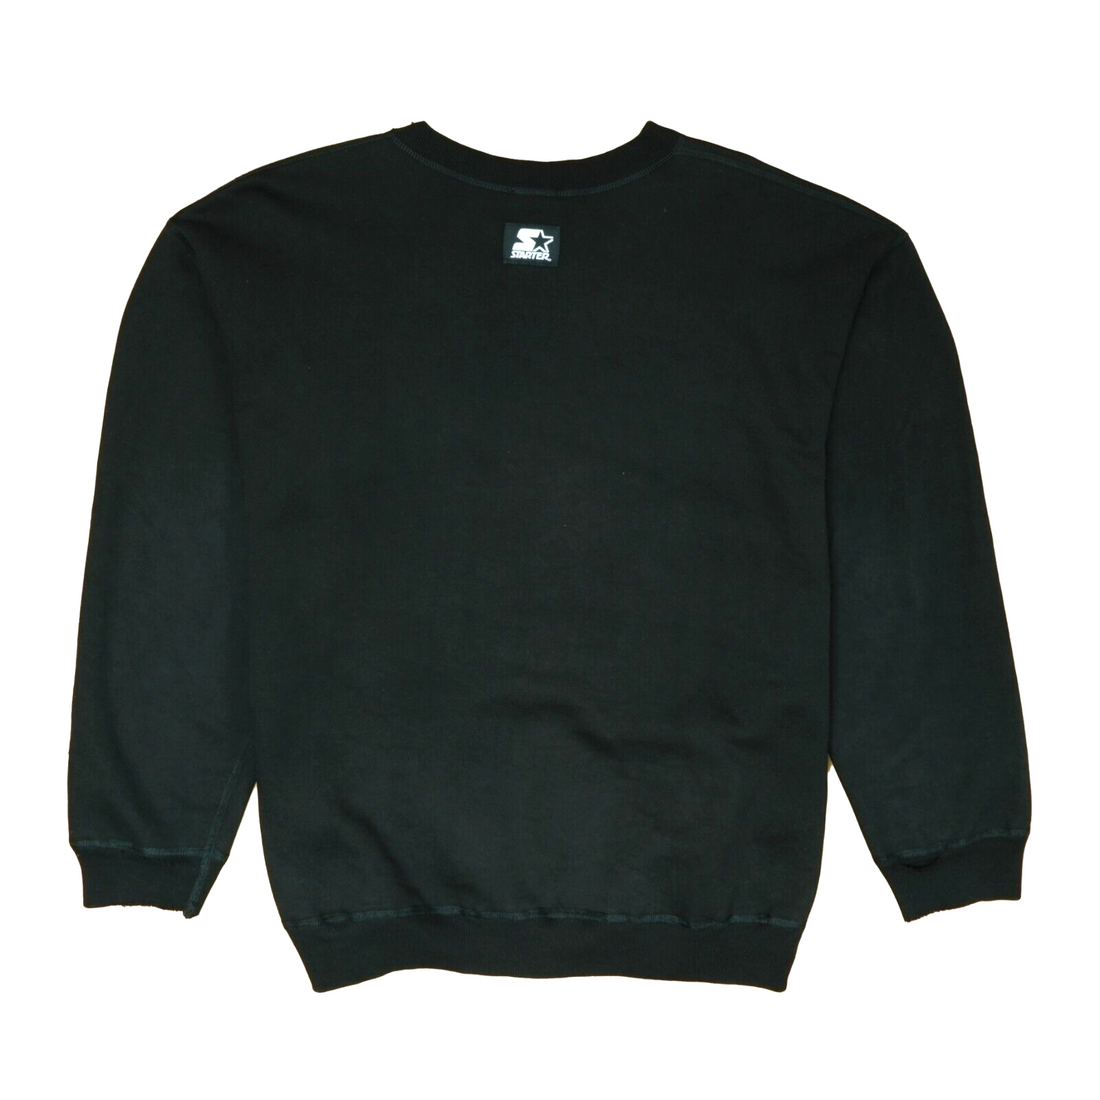 Vintage Notre Dame Fighting Irish Starter Sweatshirt Size Small Black 90s NCAA